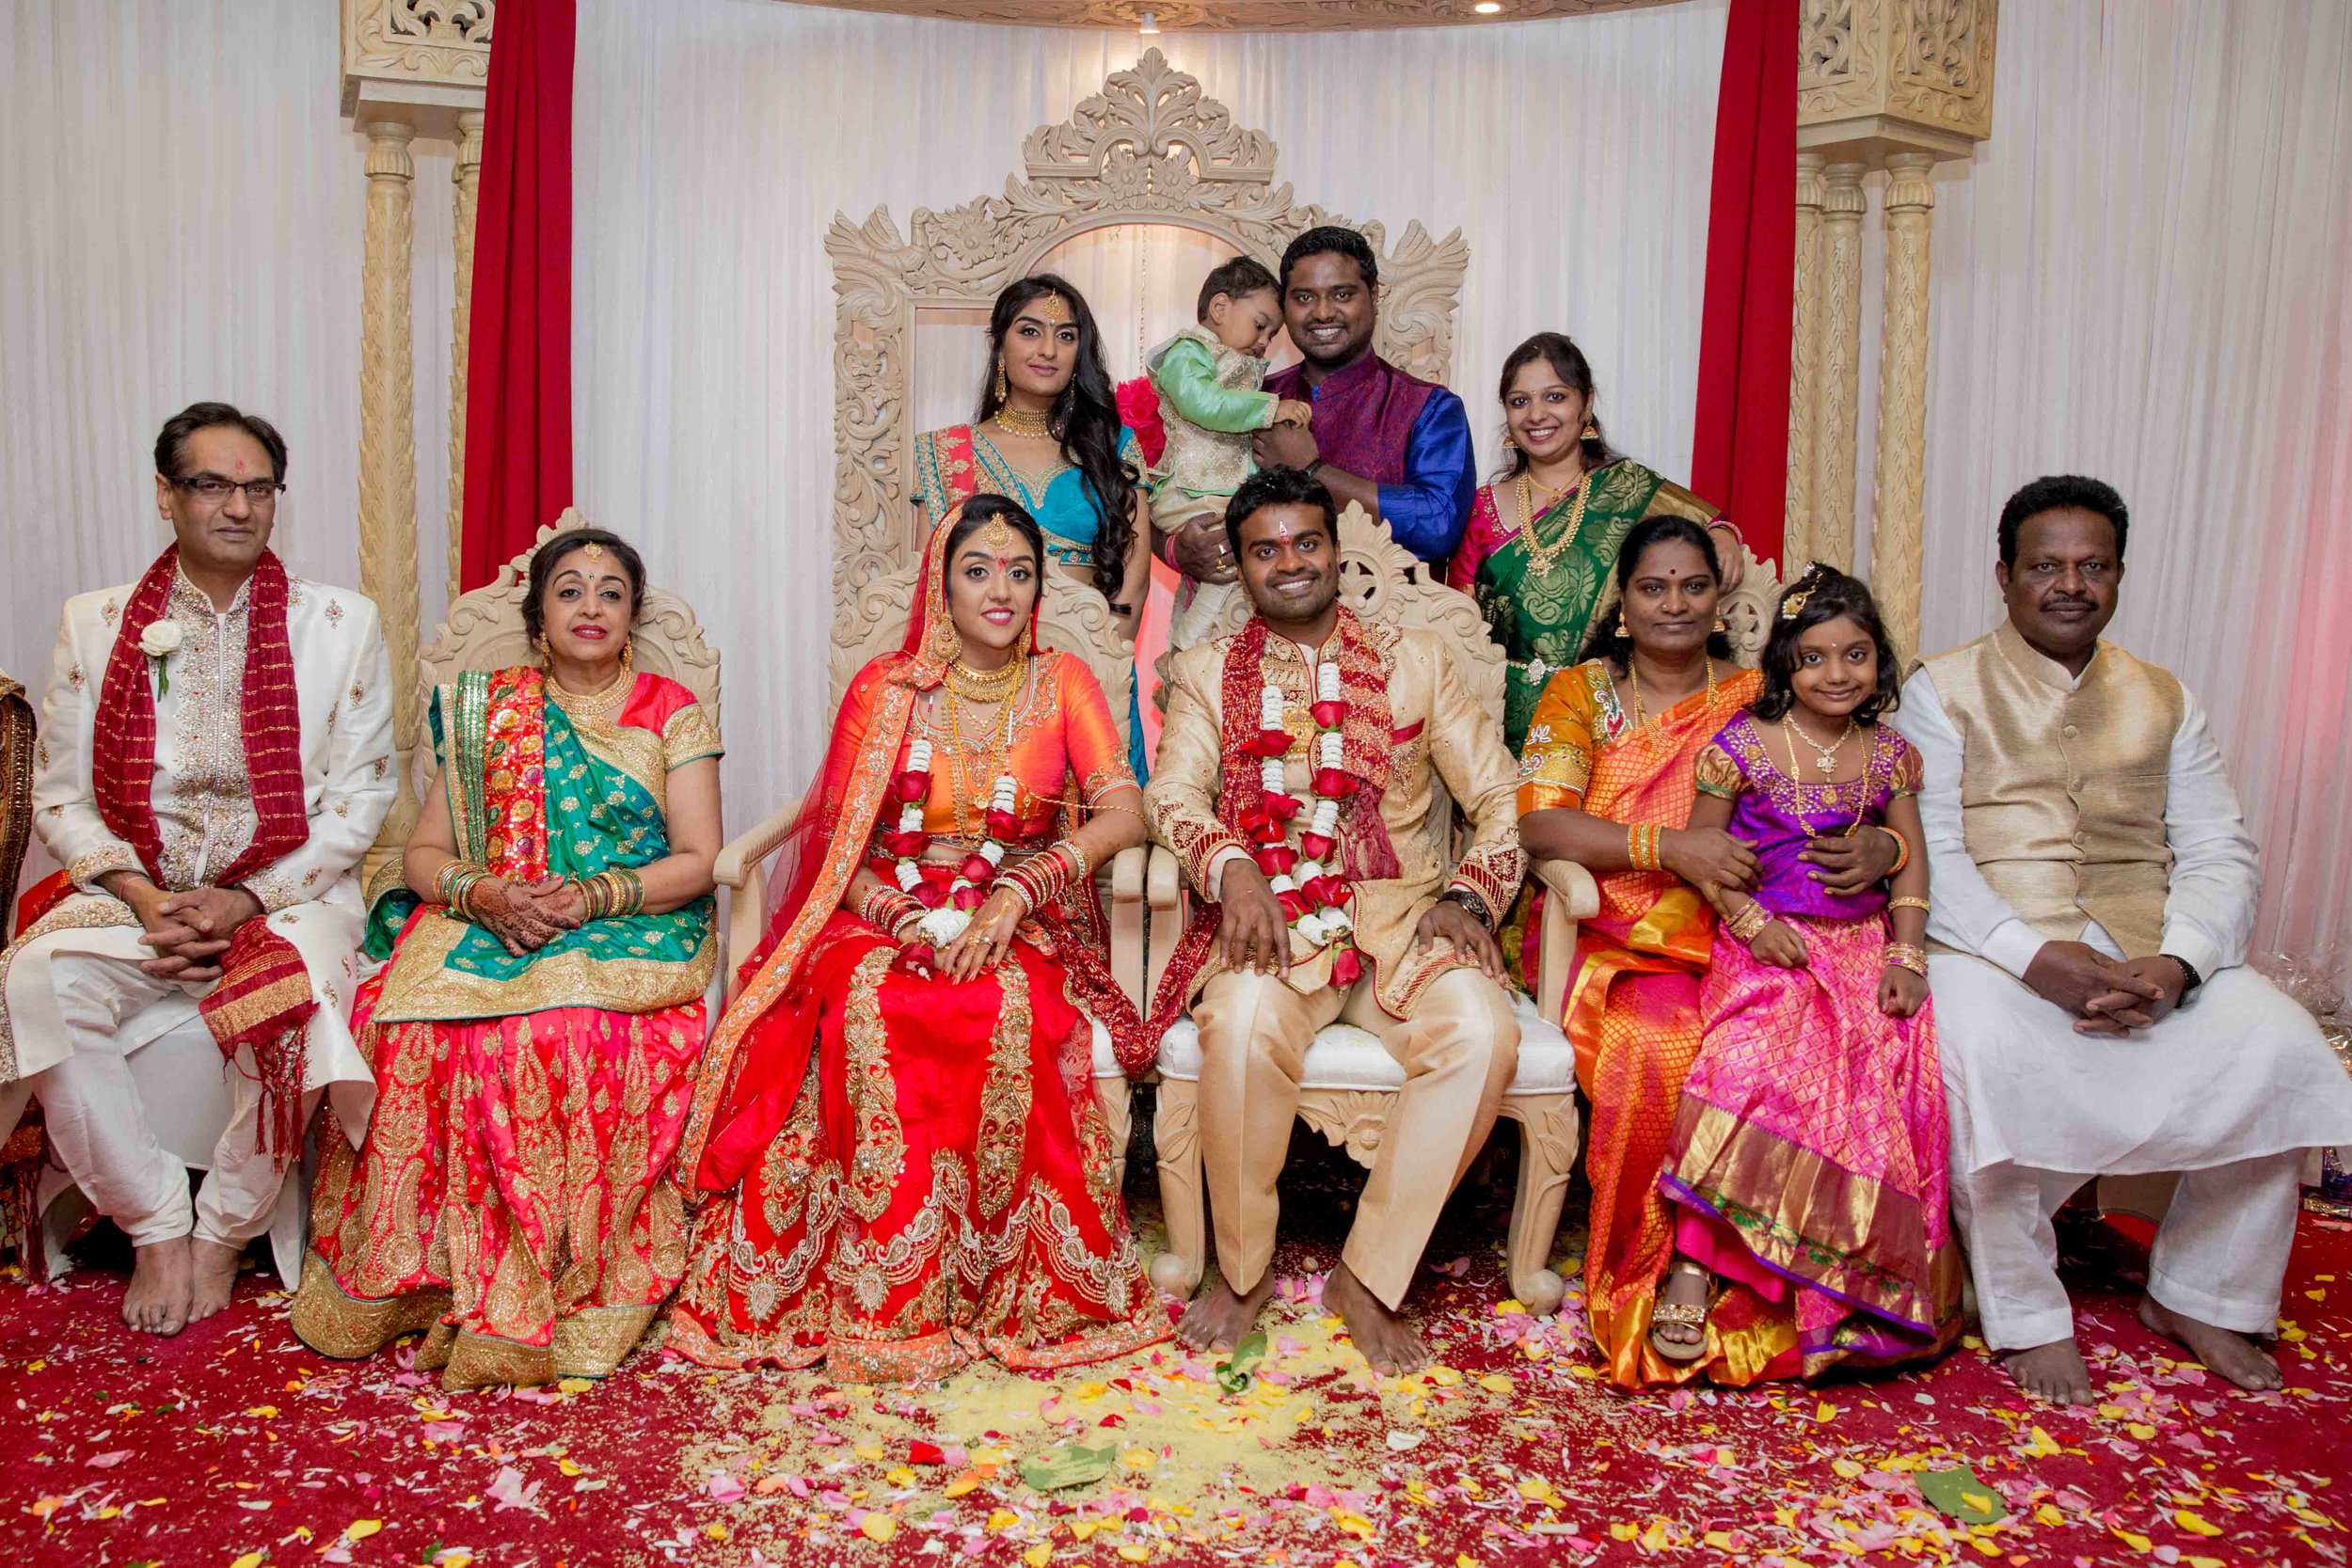 premier-banquetting-london-Hindu-asian-wedding-photographer-natalia-smith-photography-40.jpg